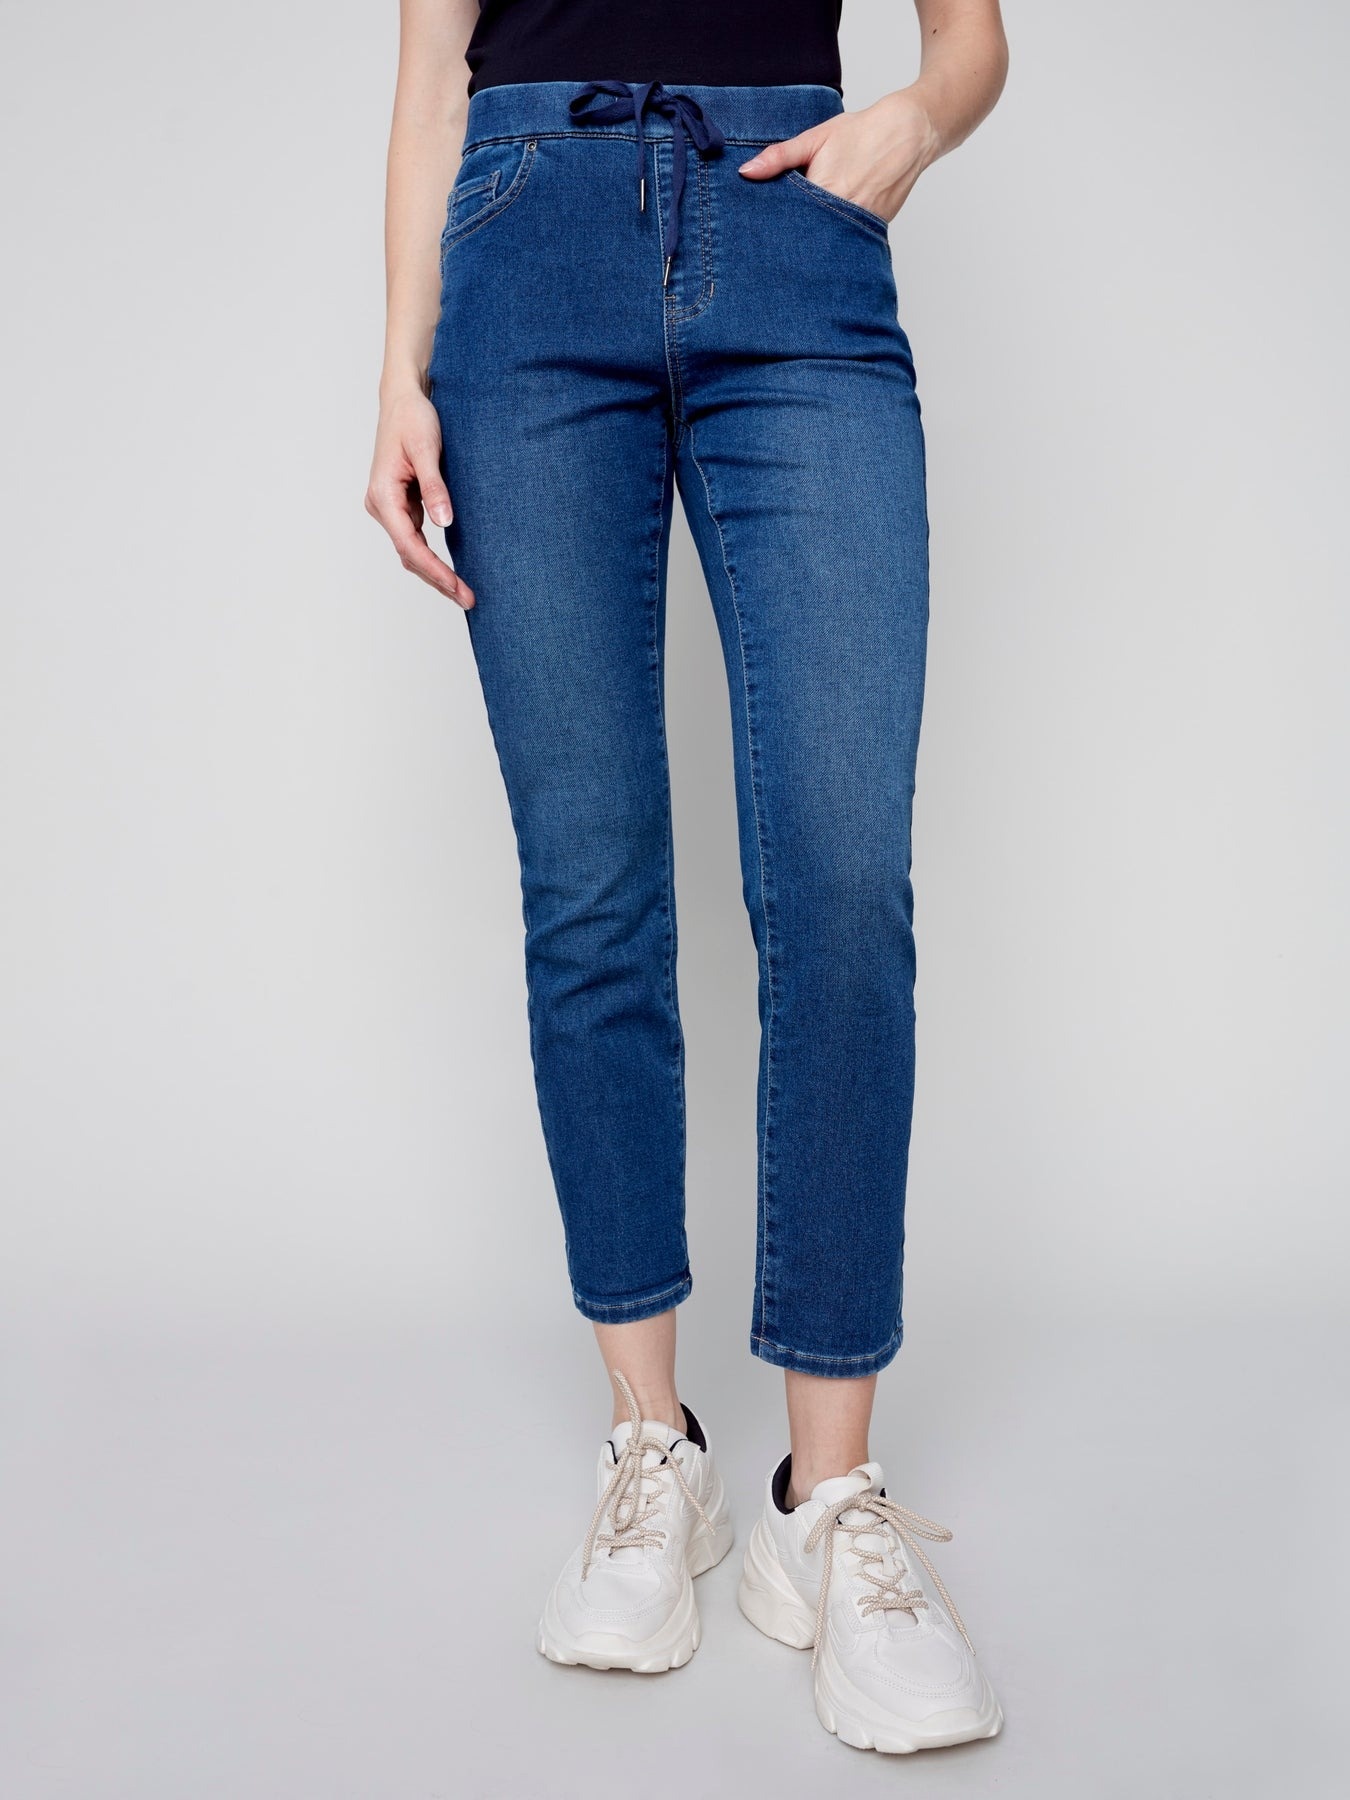 Jeans & Trousers, Women's Denim Jogger